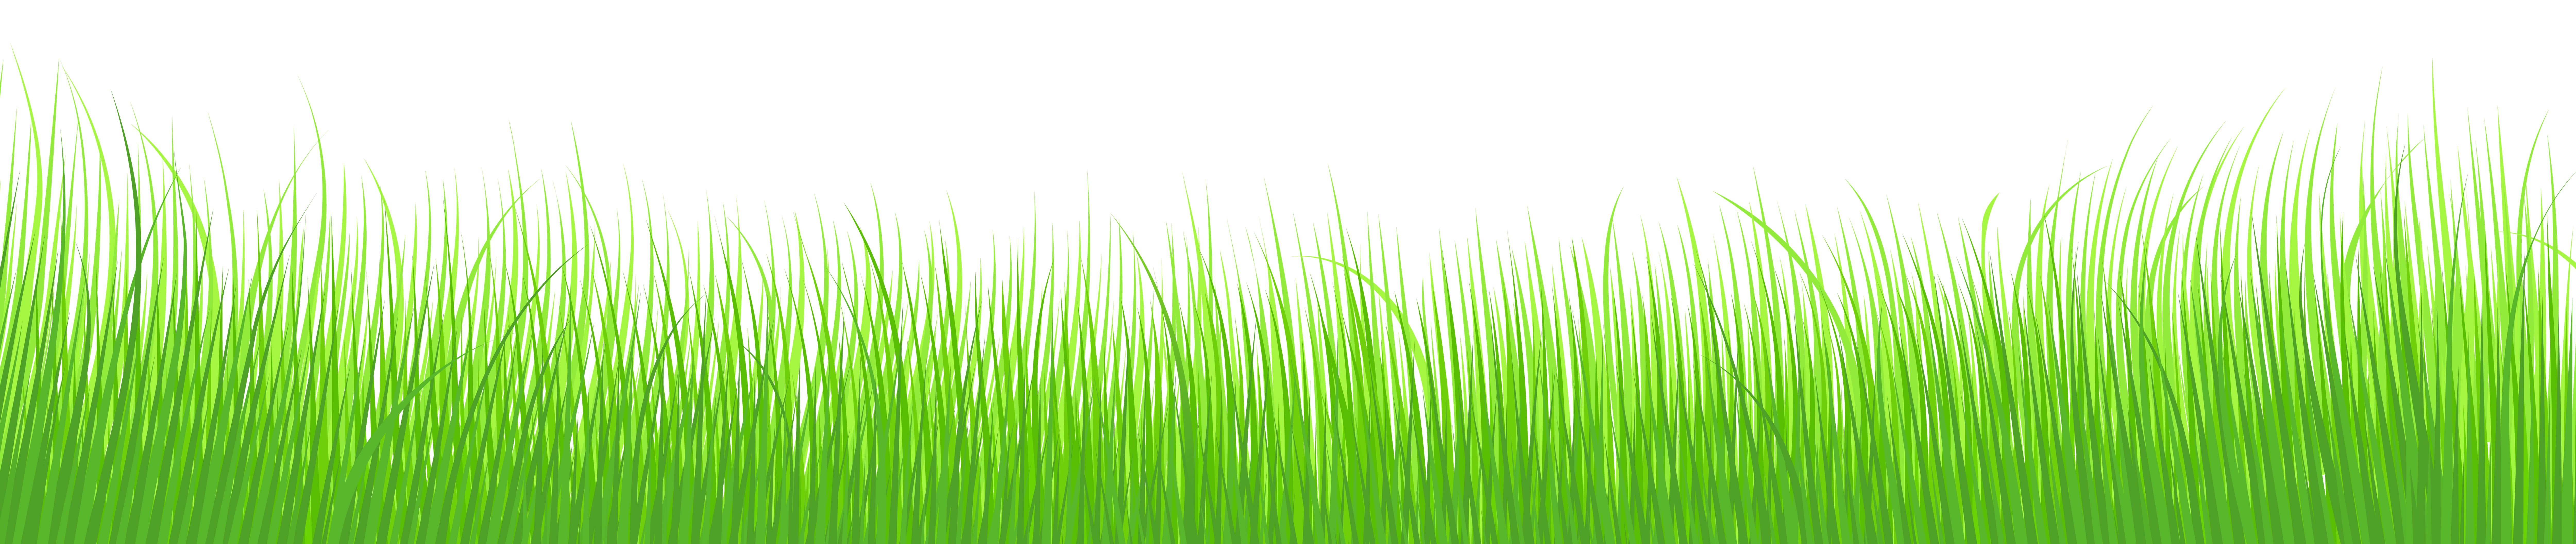 Grass field clipart free clip